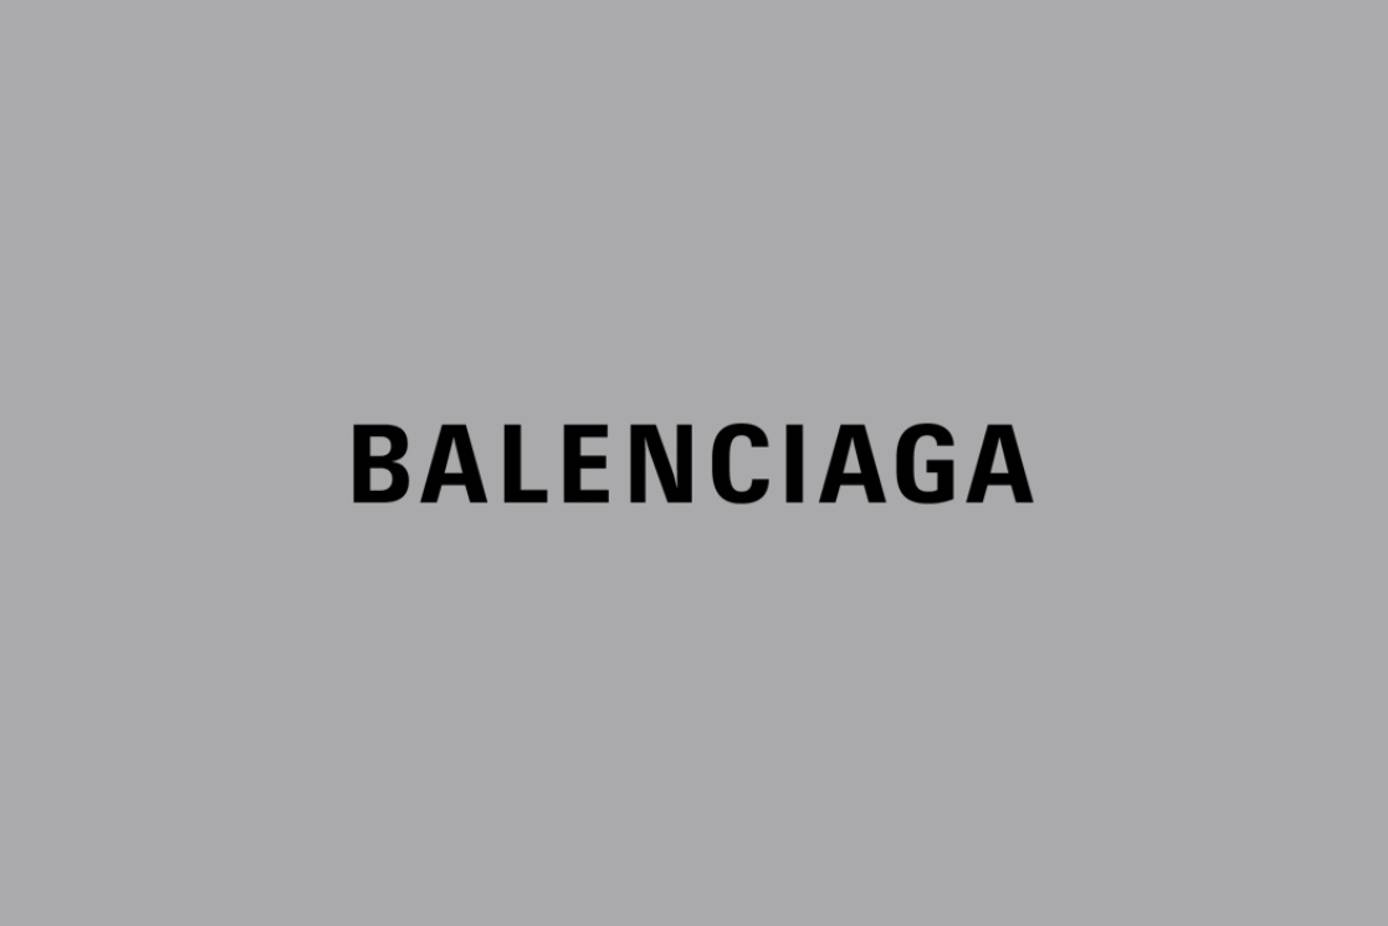 Balenciaga Appoints Ludivine Pont as Chief Marketing Officer – WWD